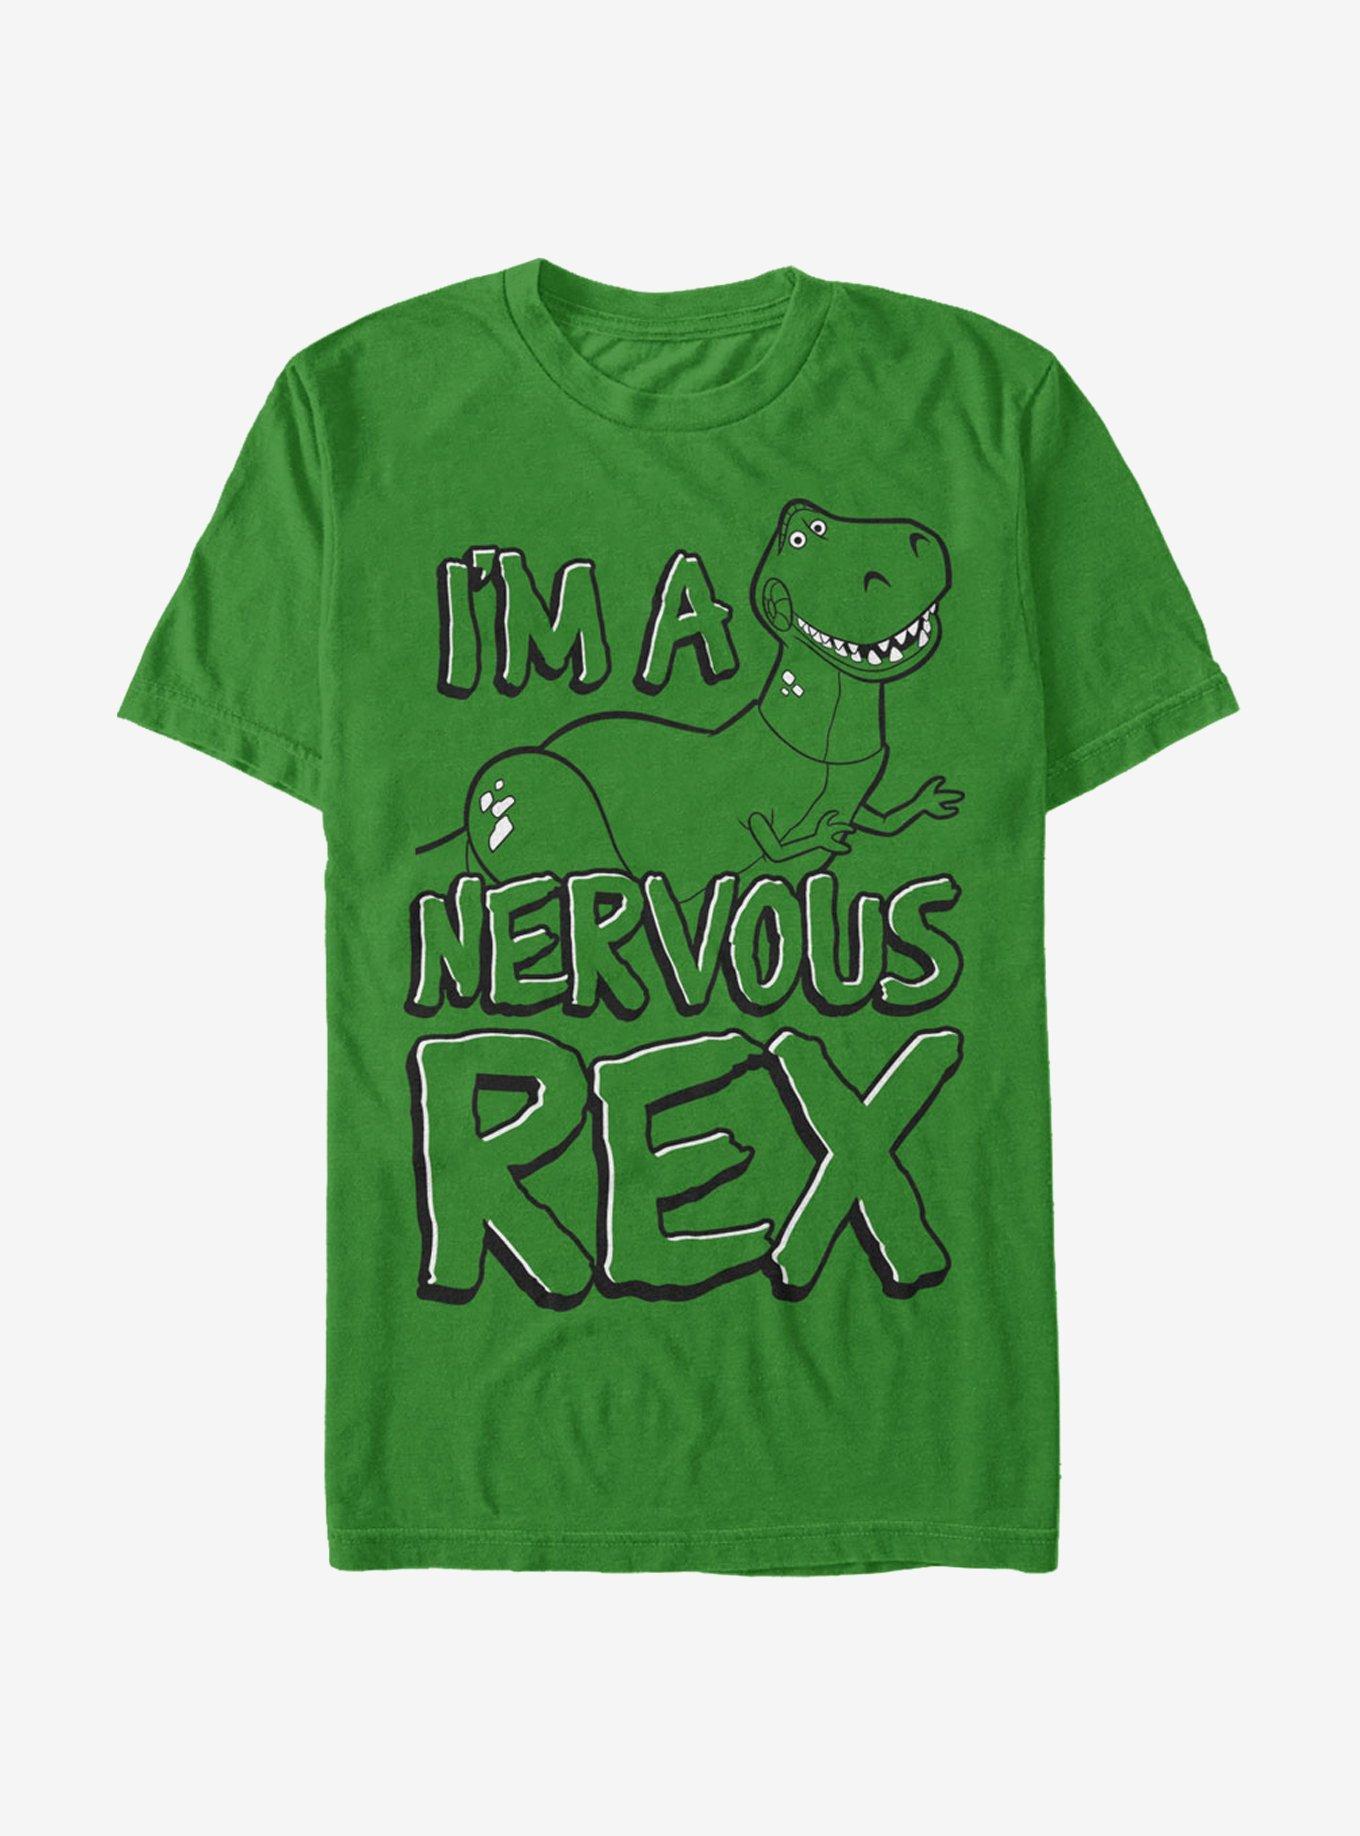 Toy Story Nervous Rex T-Shirt